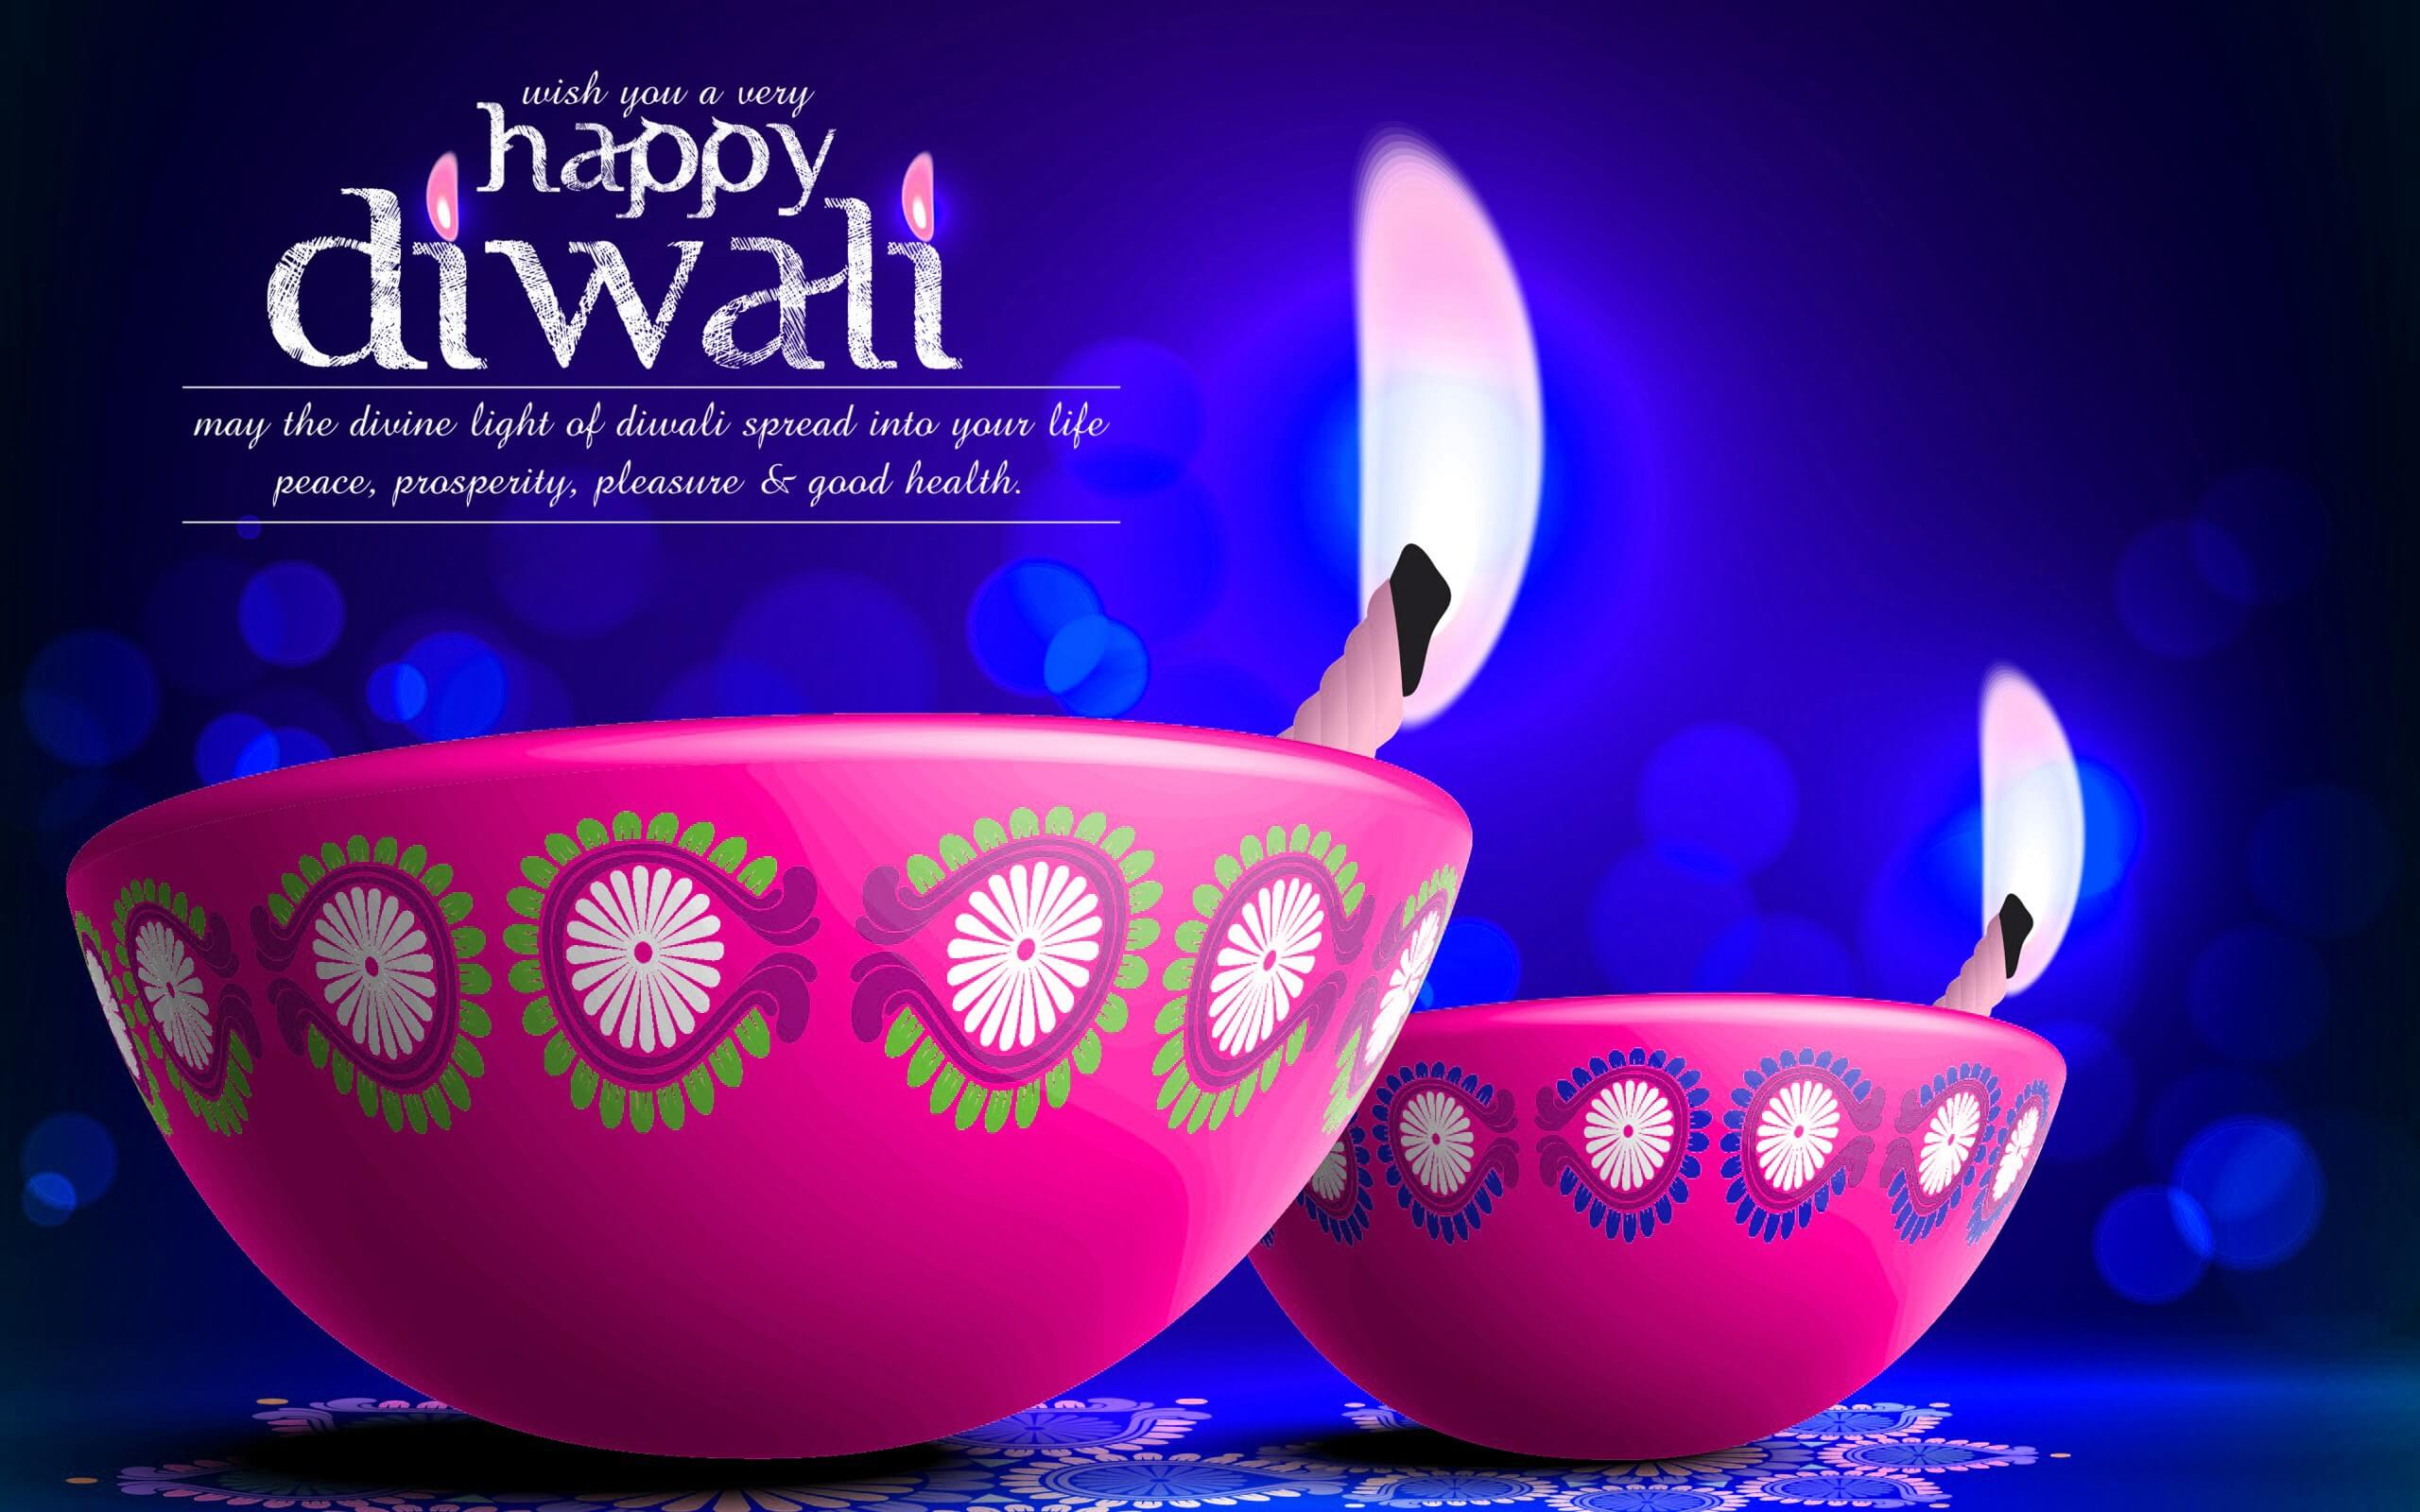 Happy Diwali 2016 HD Wallpaper, Image